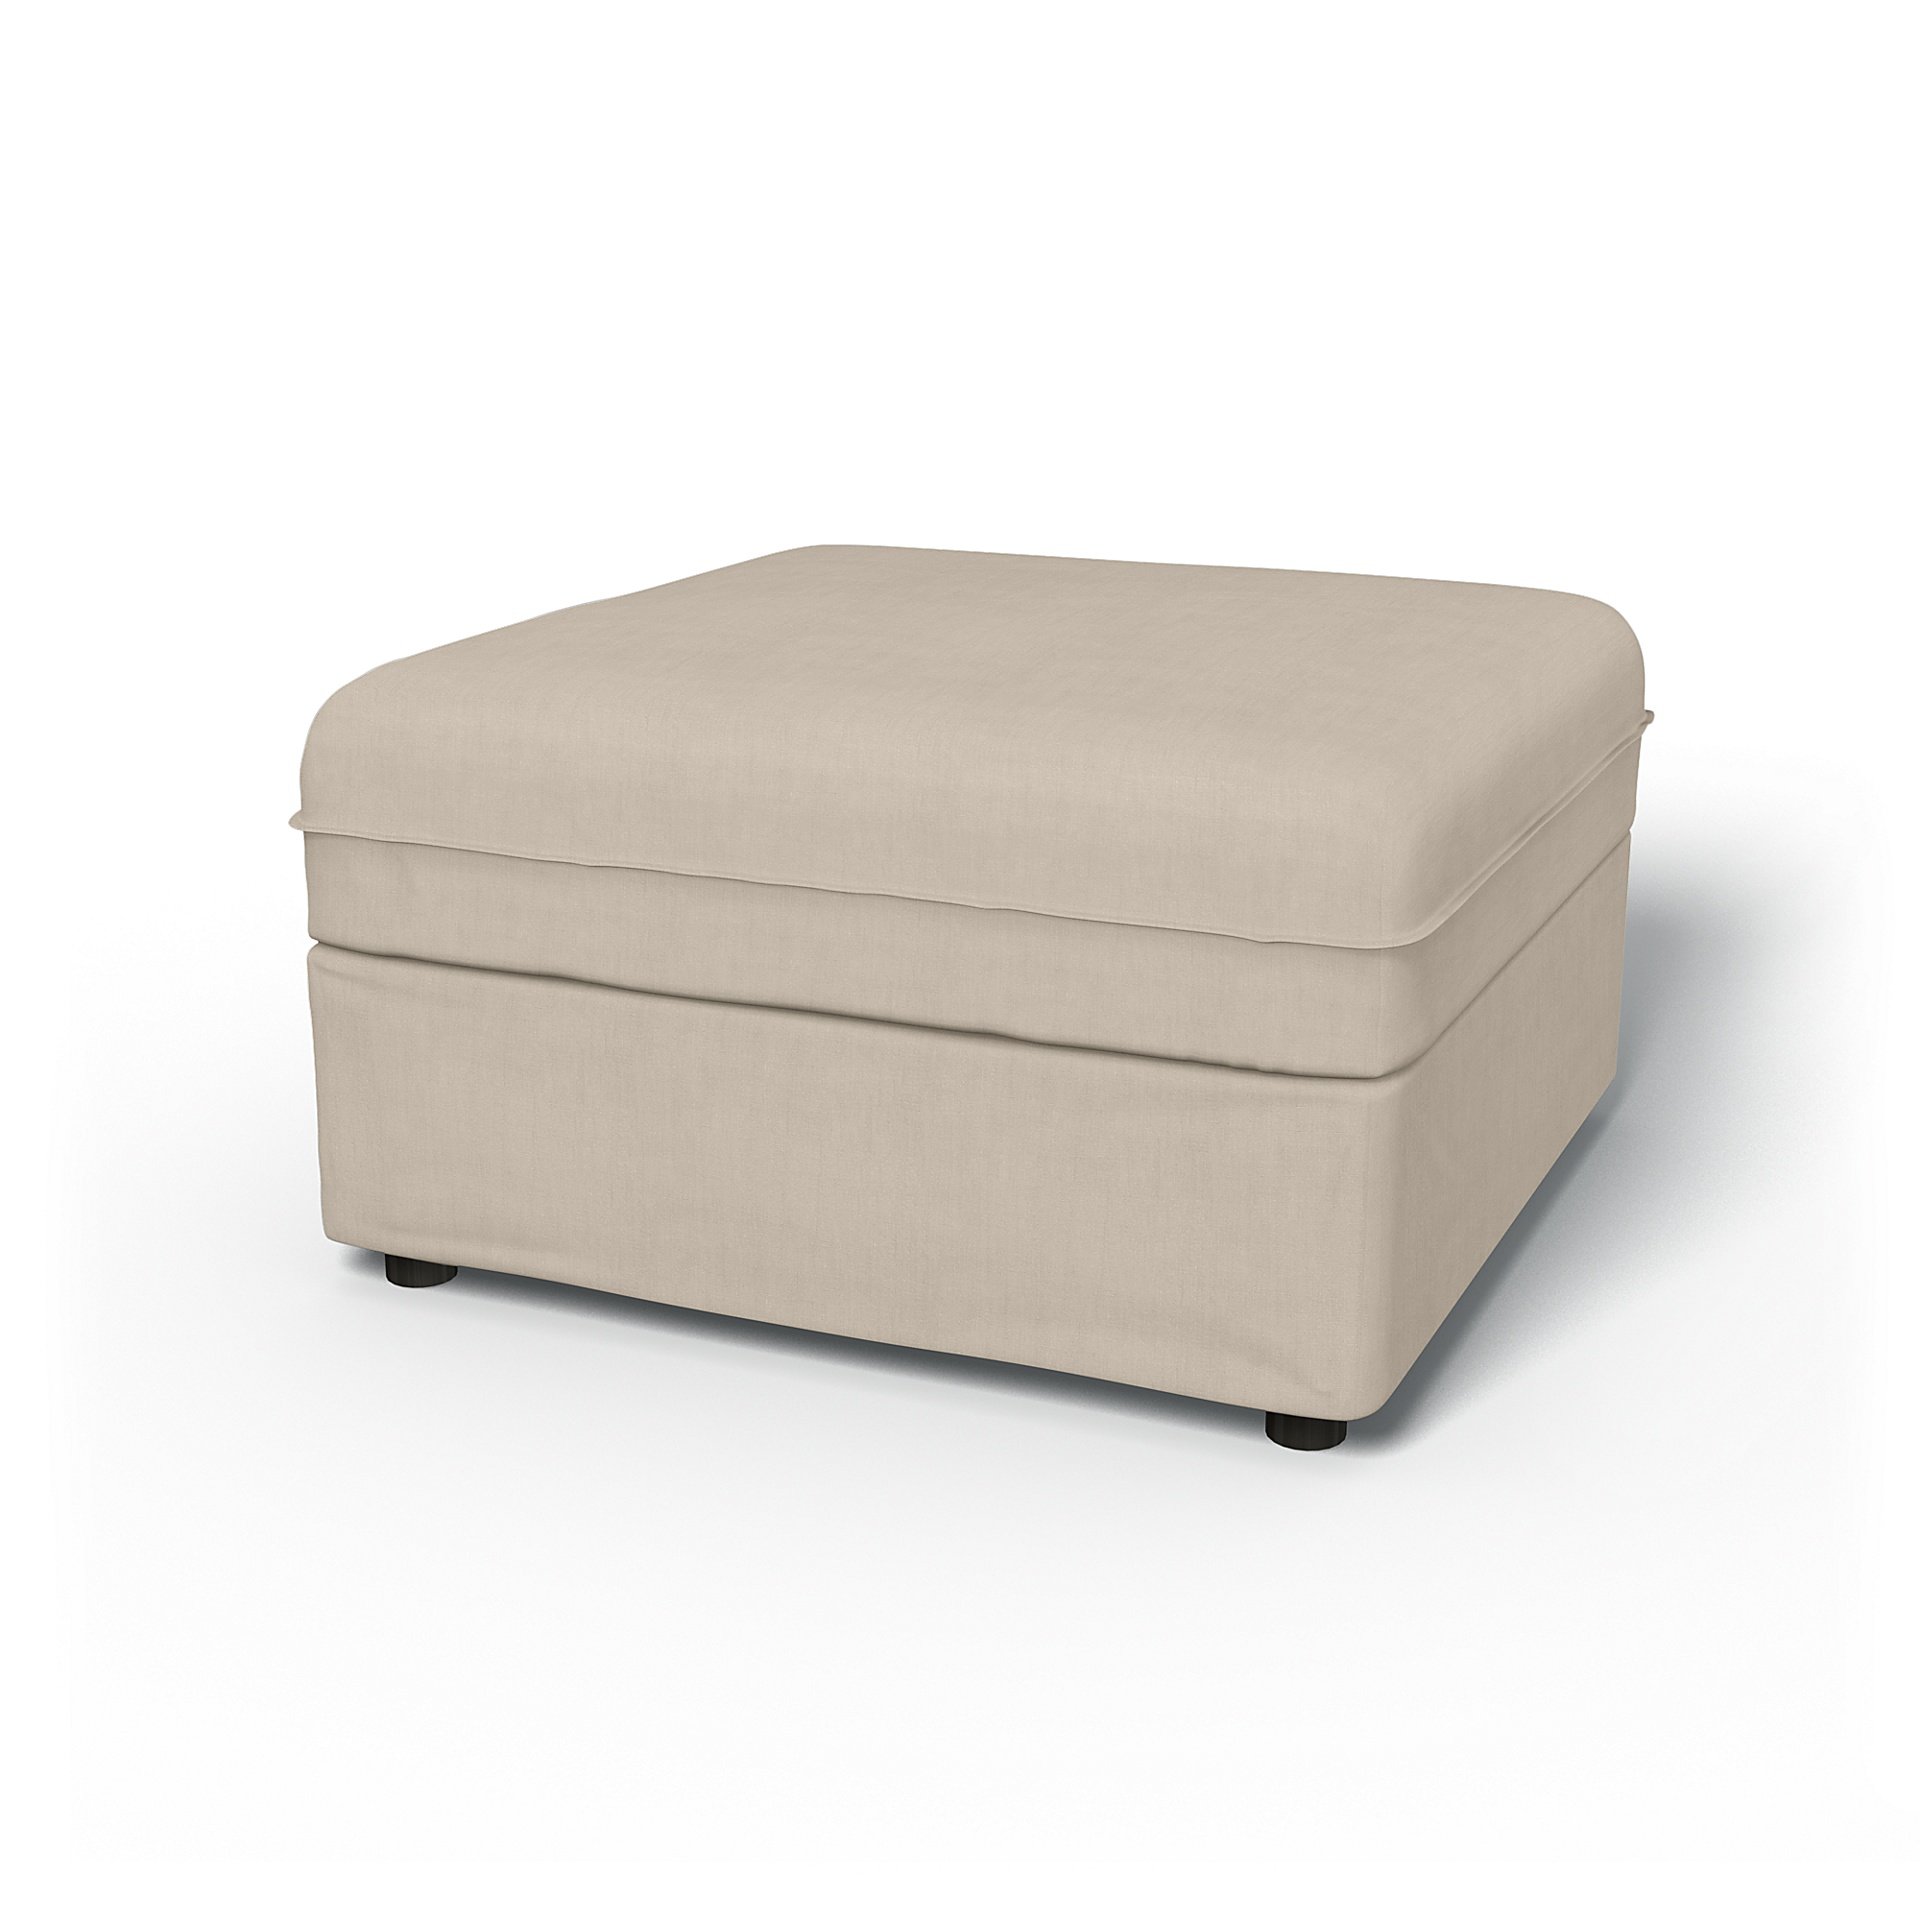 IKEA - Vallentuna Seat Module with Storage Cover 80x80cm 32x32in, Parchment, Linen - Bemz